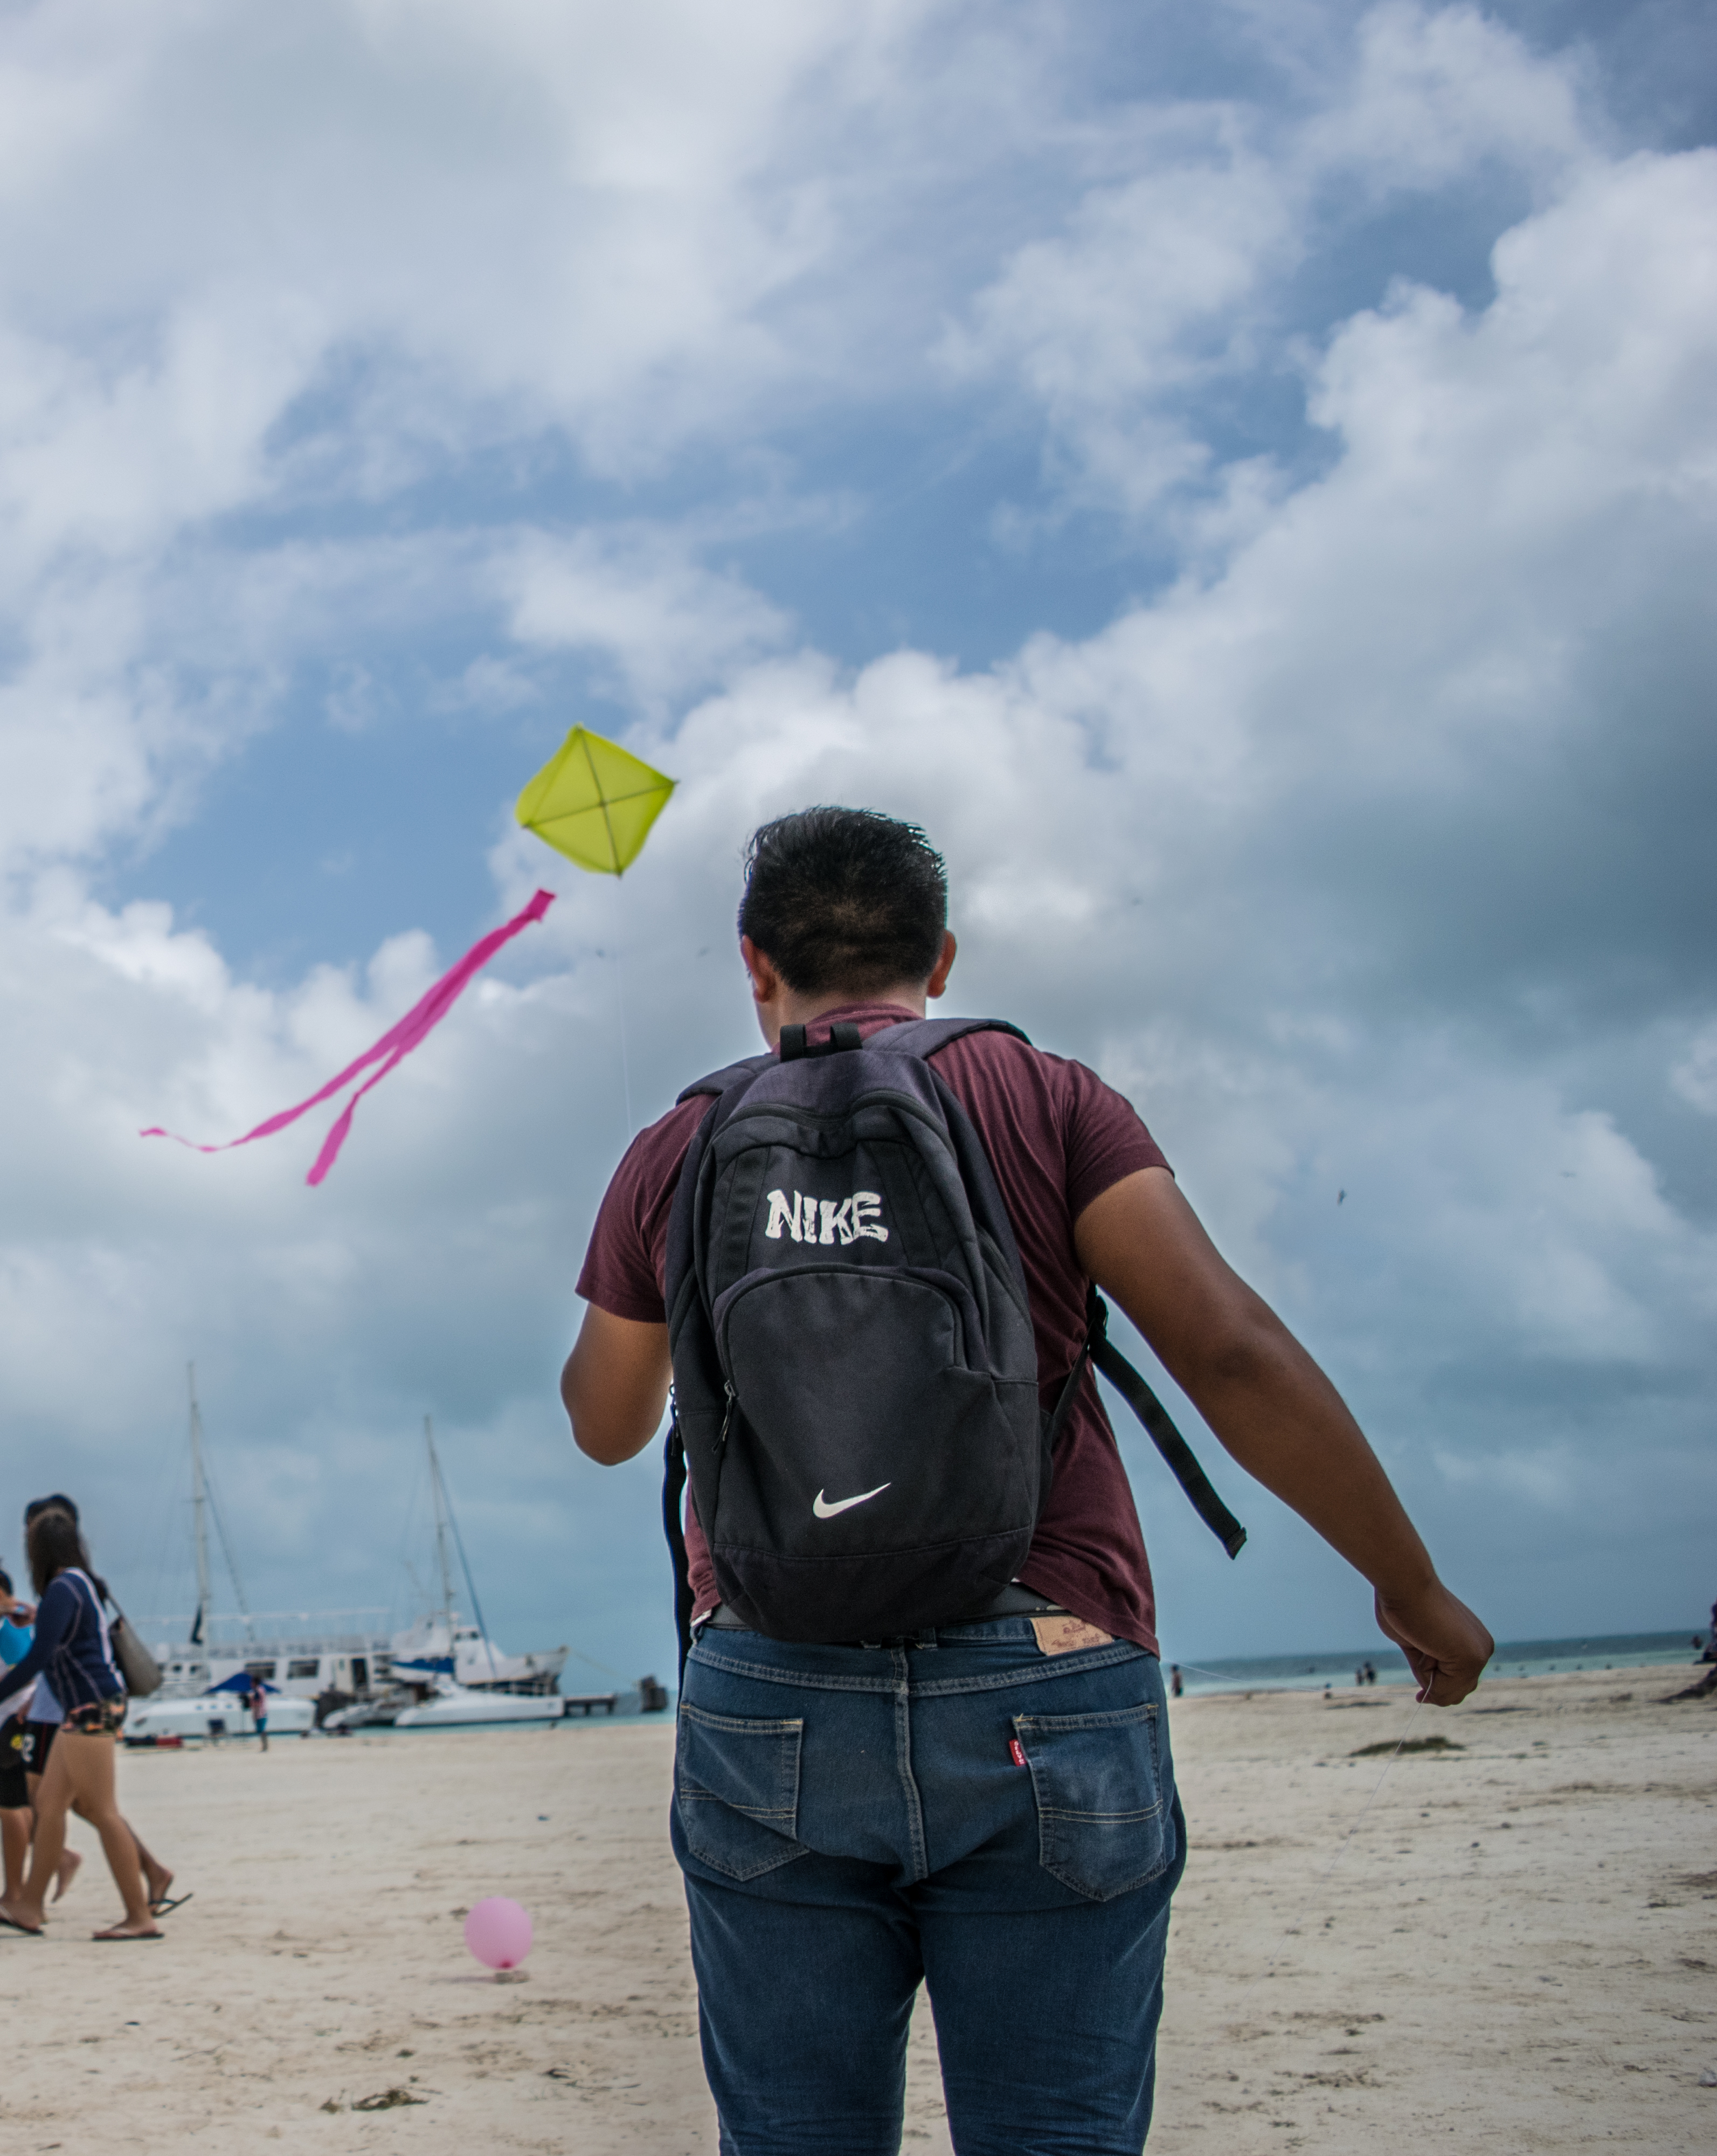 flying kites on the beach